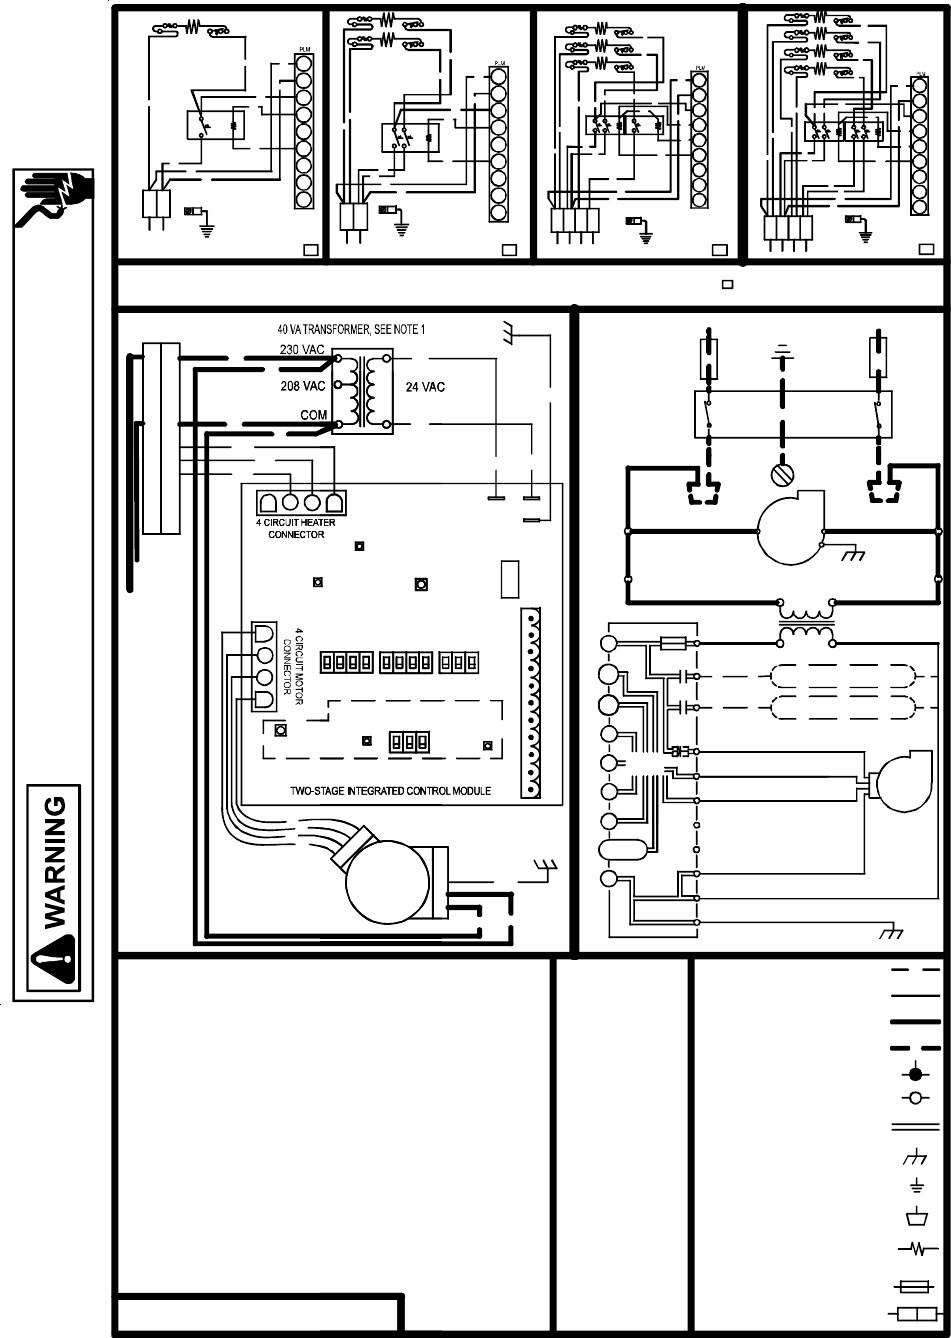 free wiring diagram Air Handler Wiring Diagram Goodman Schematic With Blueprint of Wiring